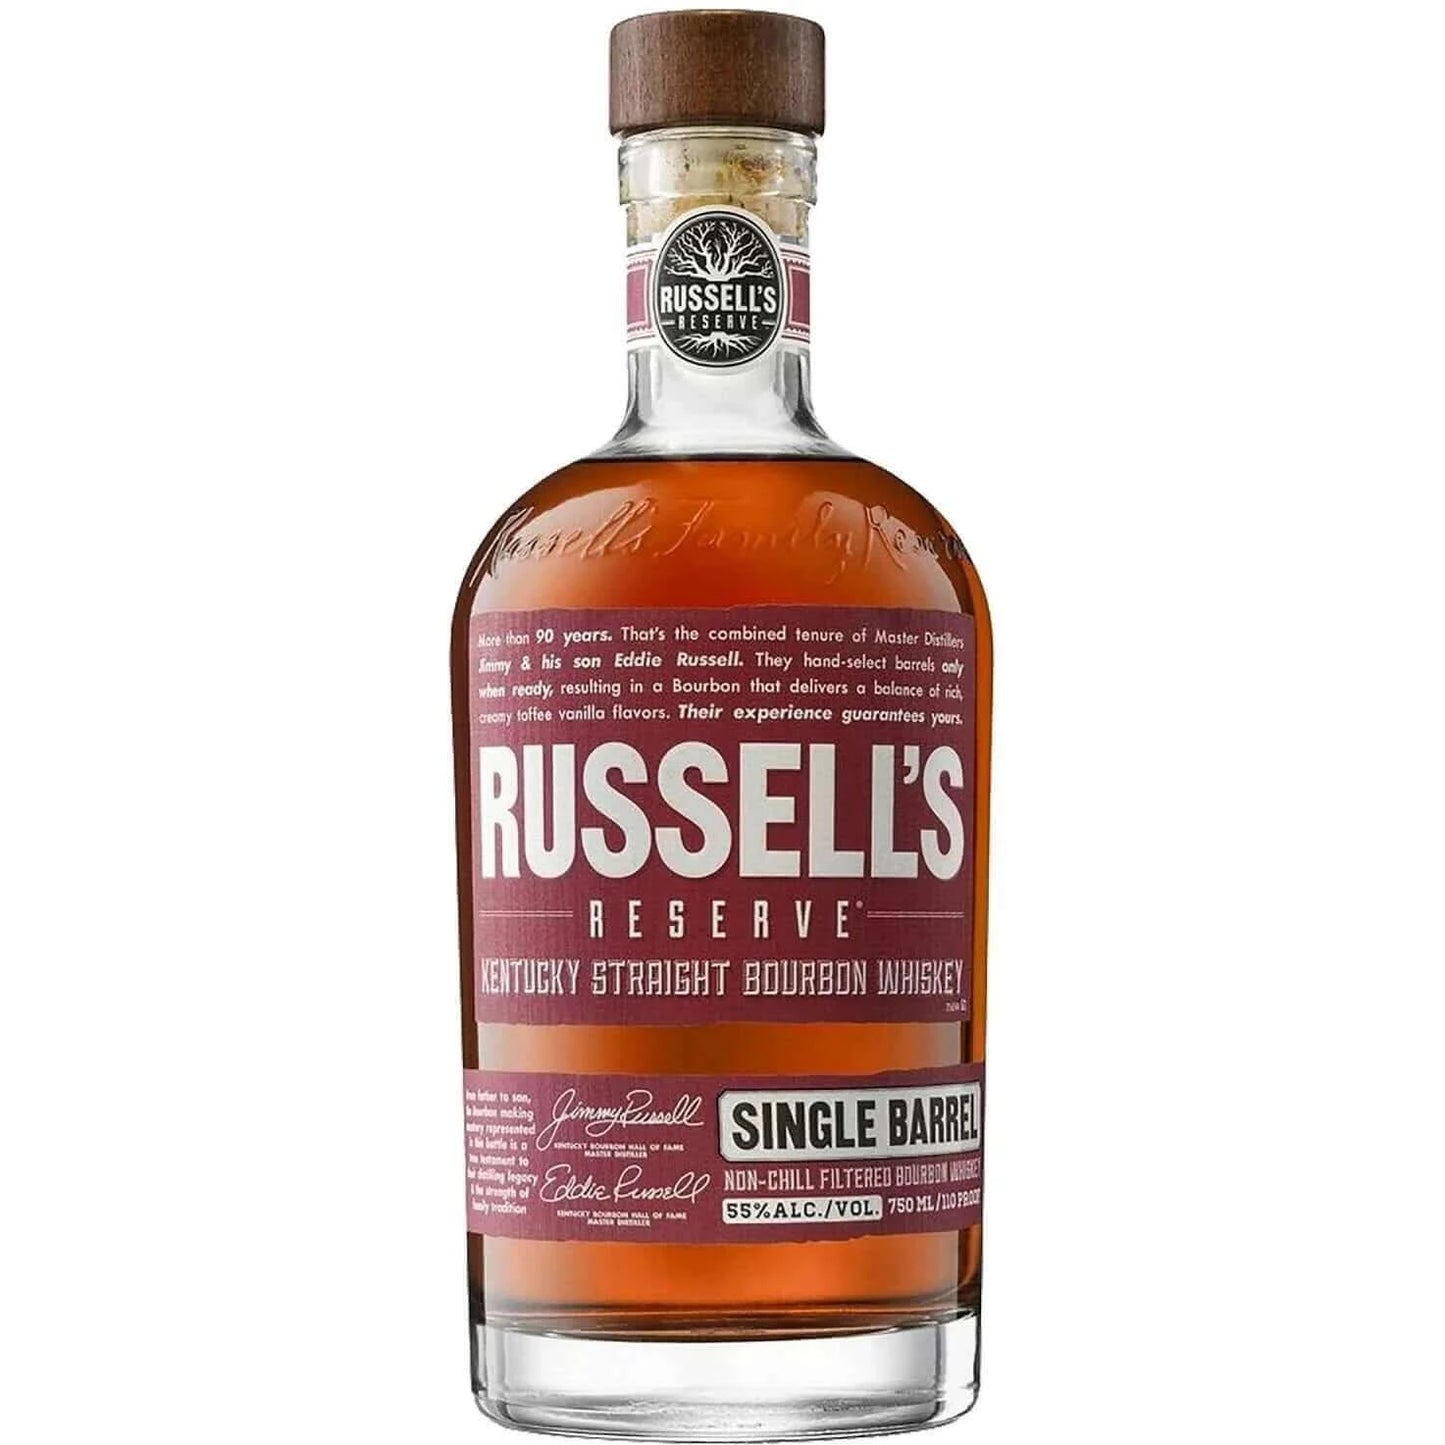 Russel's Reserve Singe Barrel Bourbon